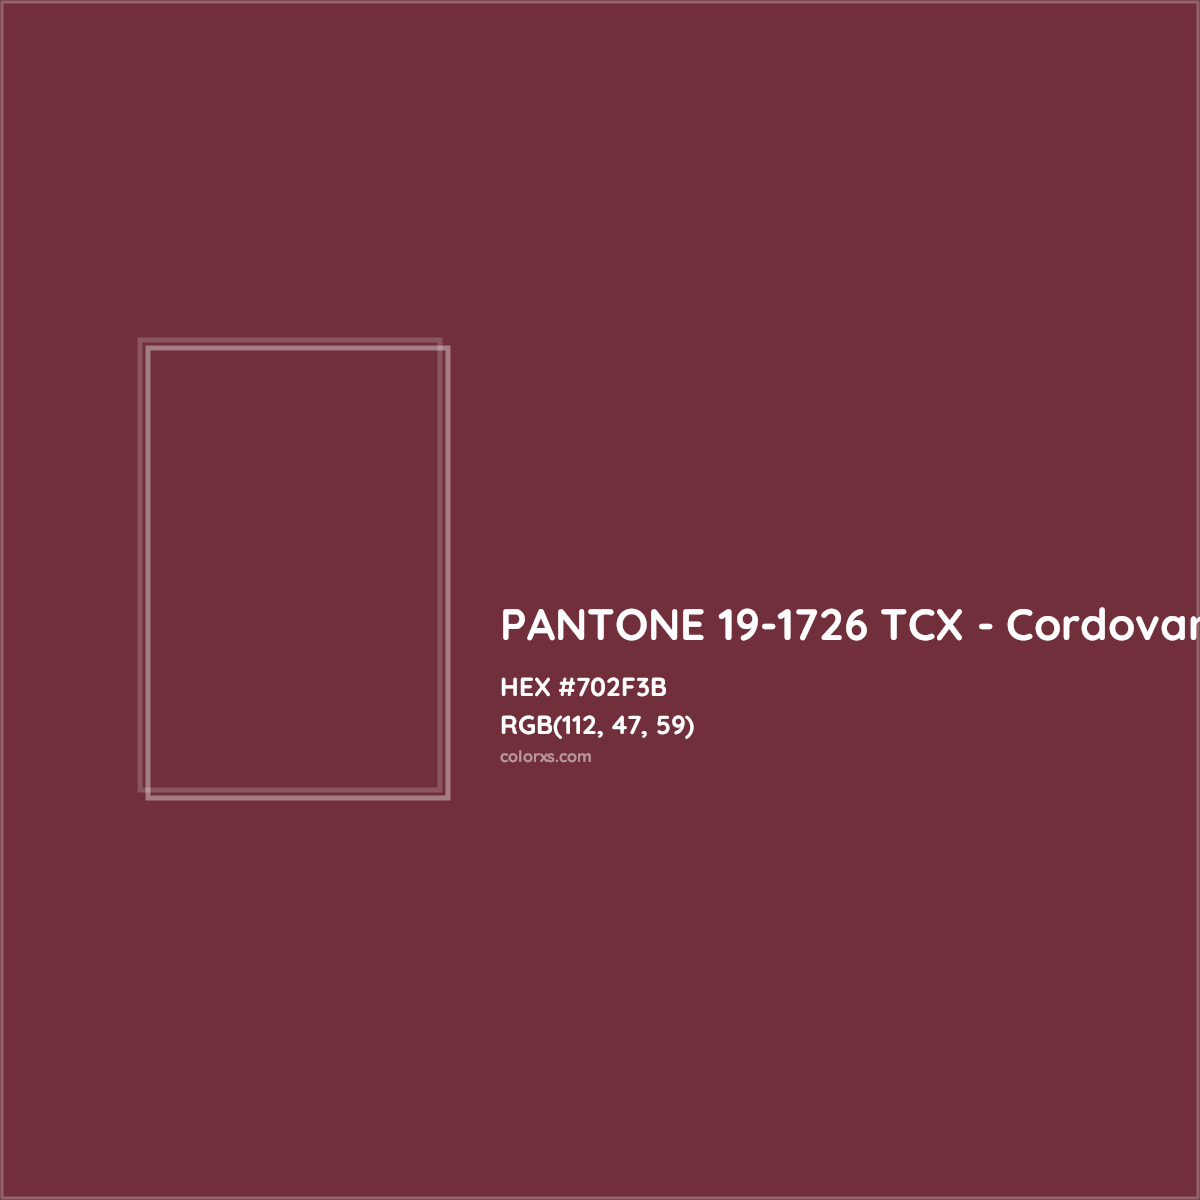 HEX #702F3B PANTONE 19-1726 TCX - Cordovan CMS Pantone TCX - Color Code